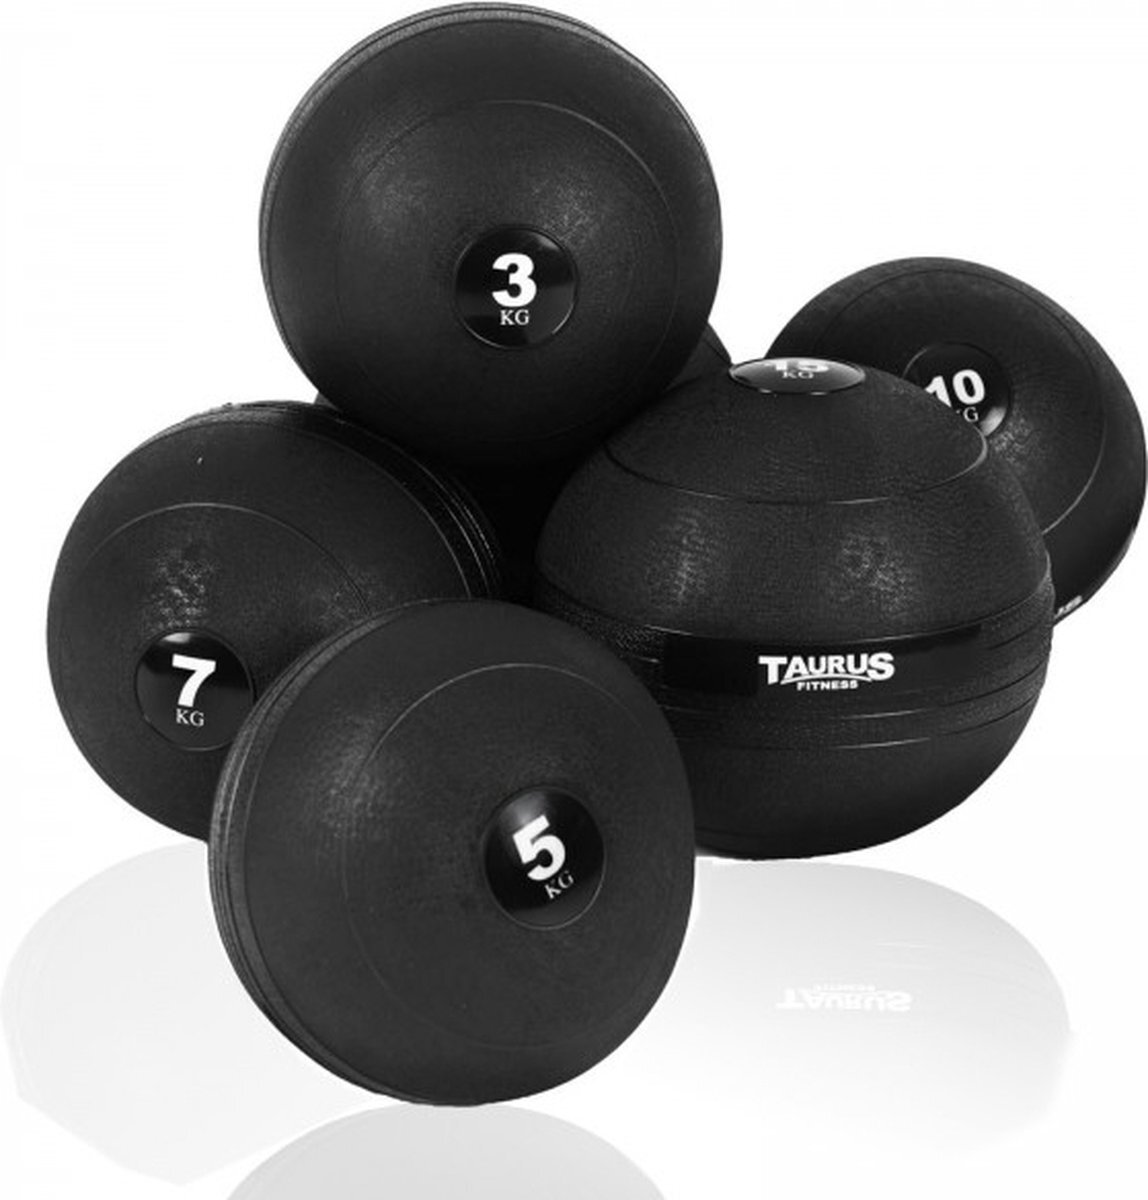 Taurus Slam Ball 5 kg - functionele training van kracht, lenigheid en uithoudingsvermogen